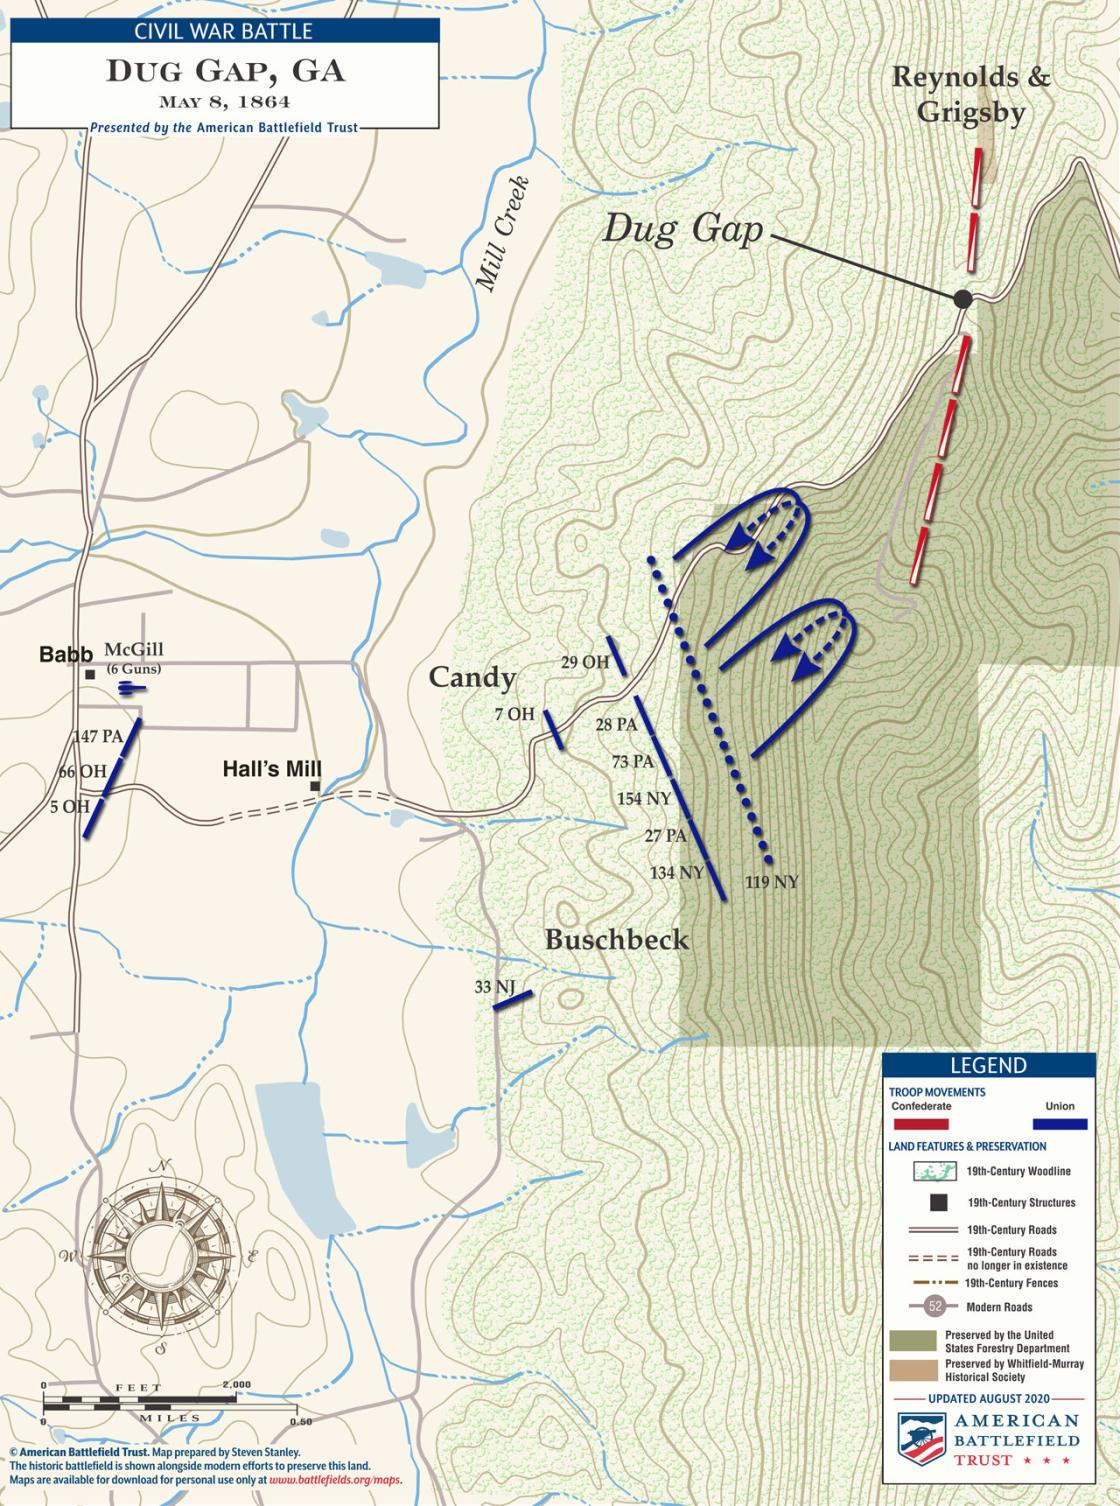 Dug Gap | May 8, 1864 (August 2020)